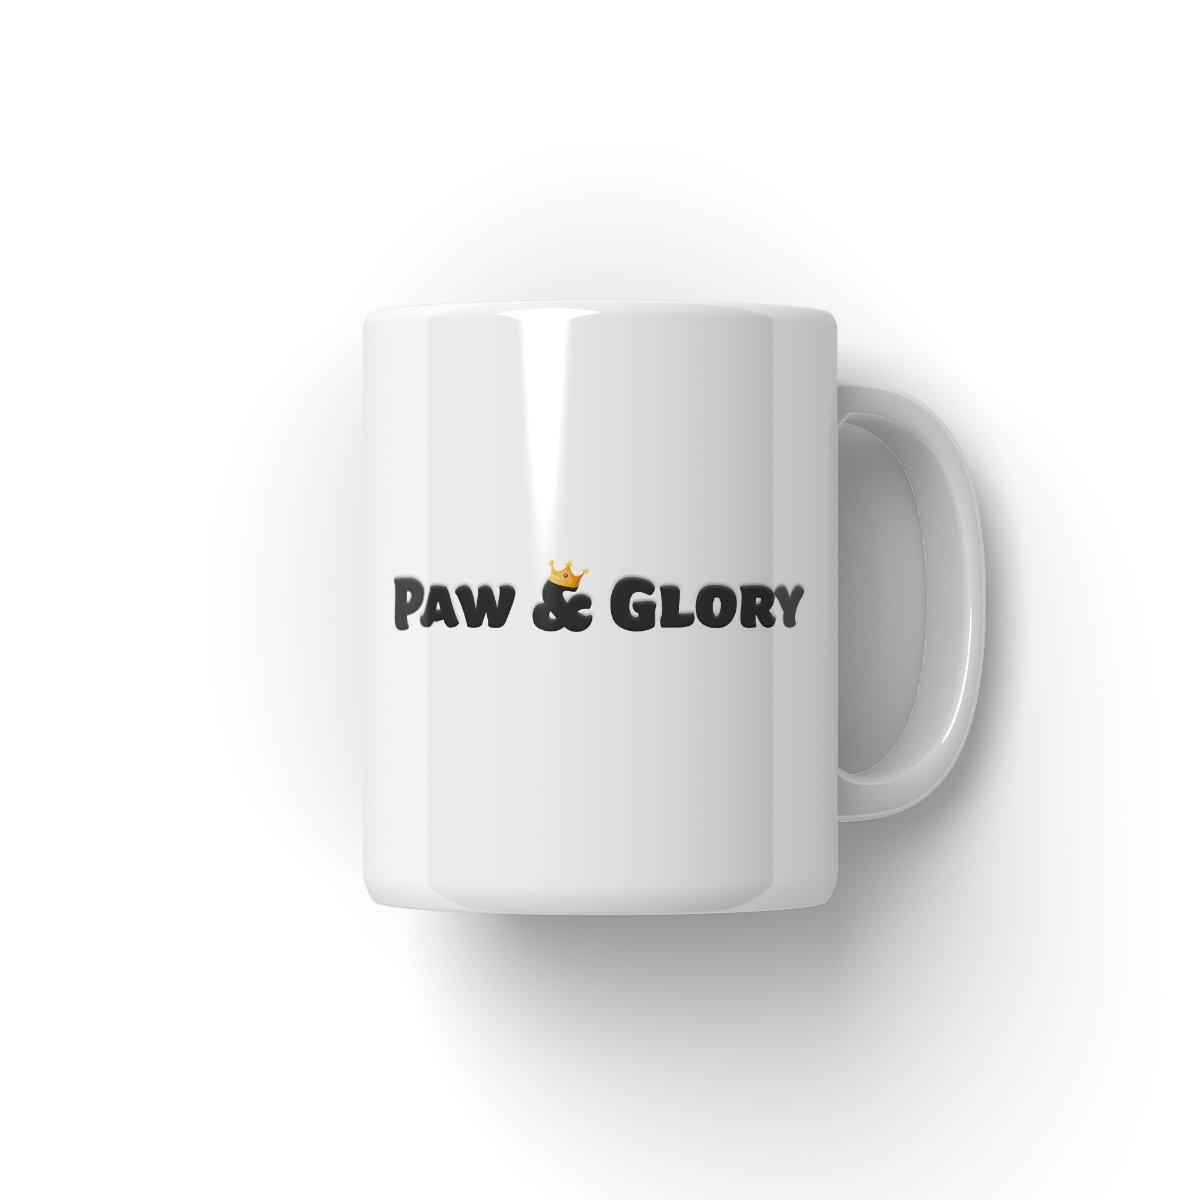 Paw & Glory, paw and glory, personalised mugs with dogs, dog photo mug, pet mug portraits, mug for dog, personalized coffee mug with cats, personalised dog mug, Pet Portrait Mug,